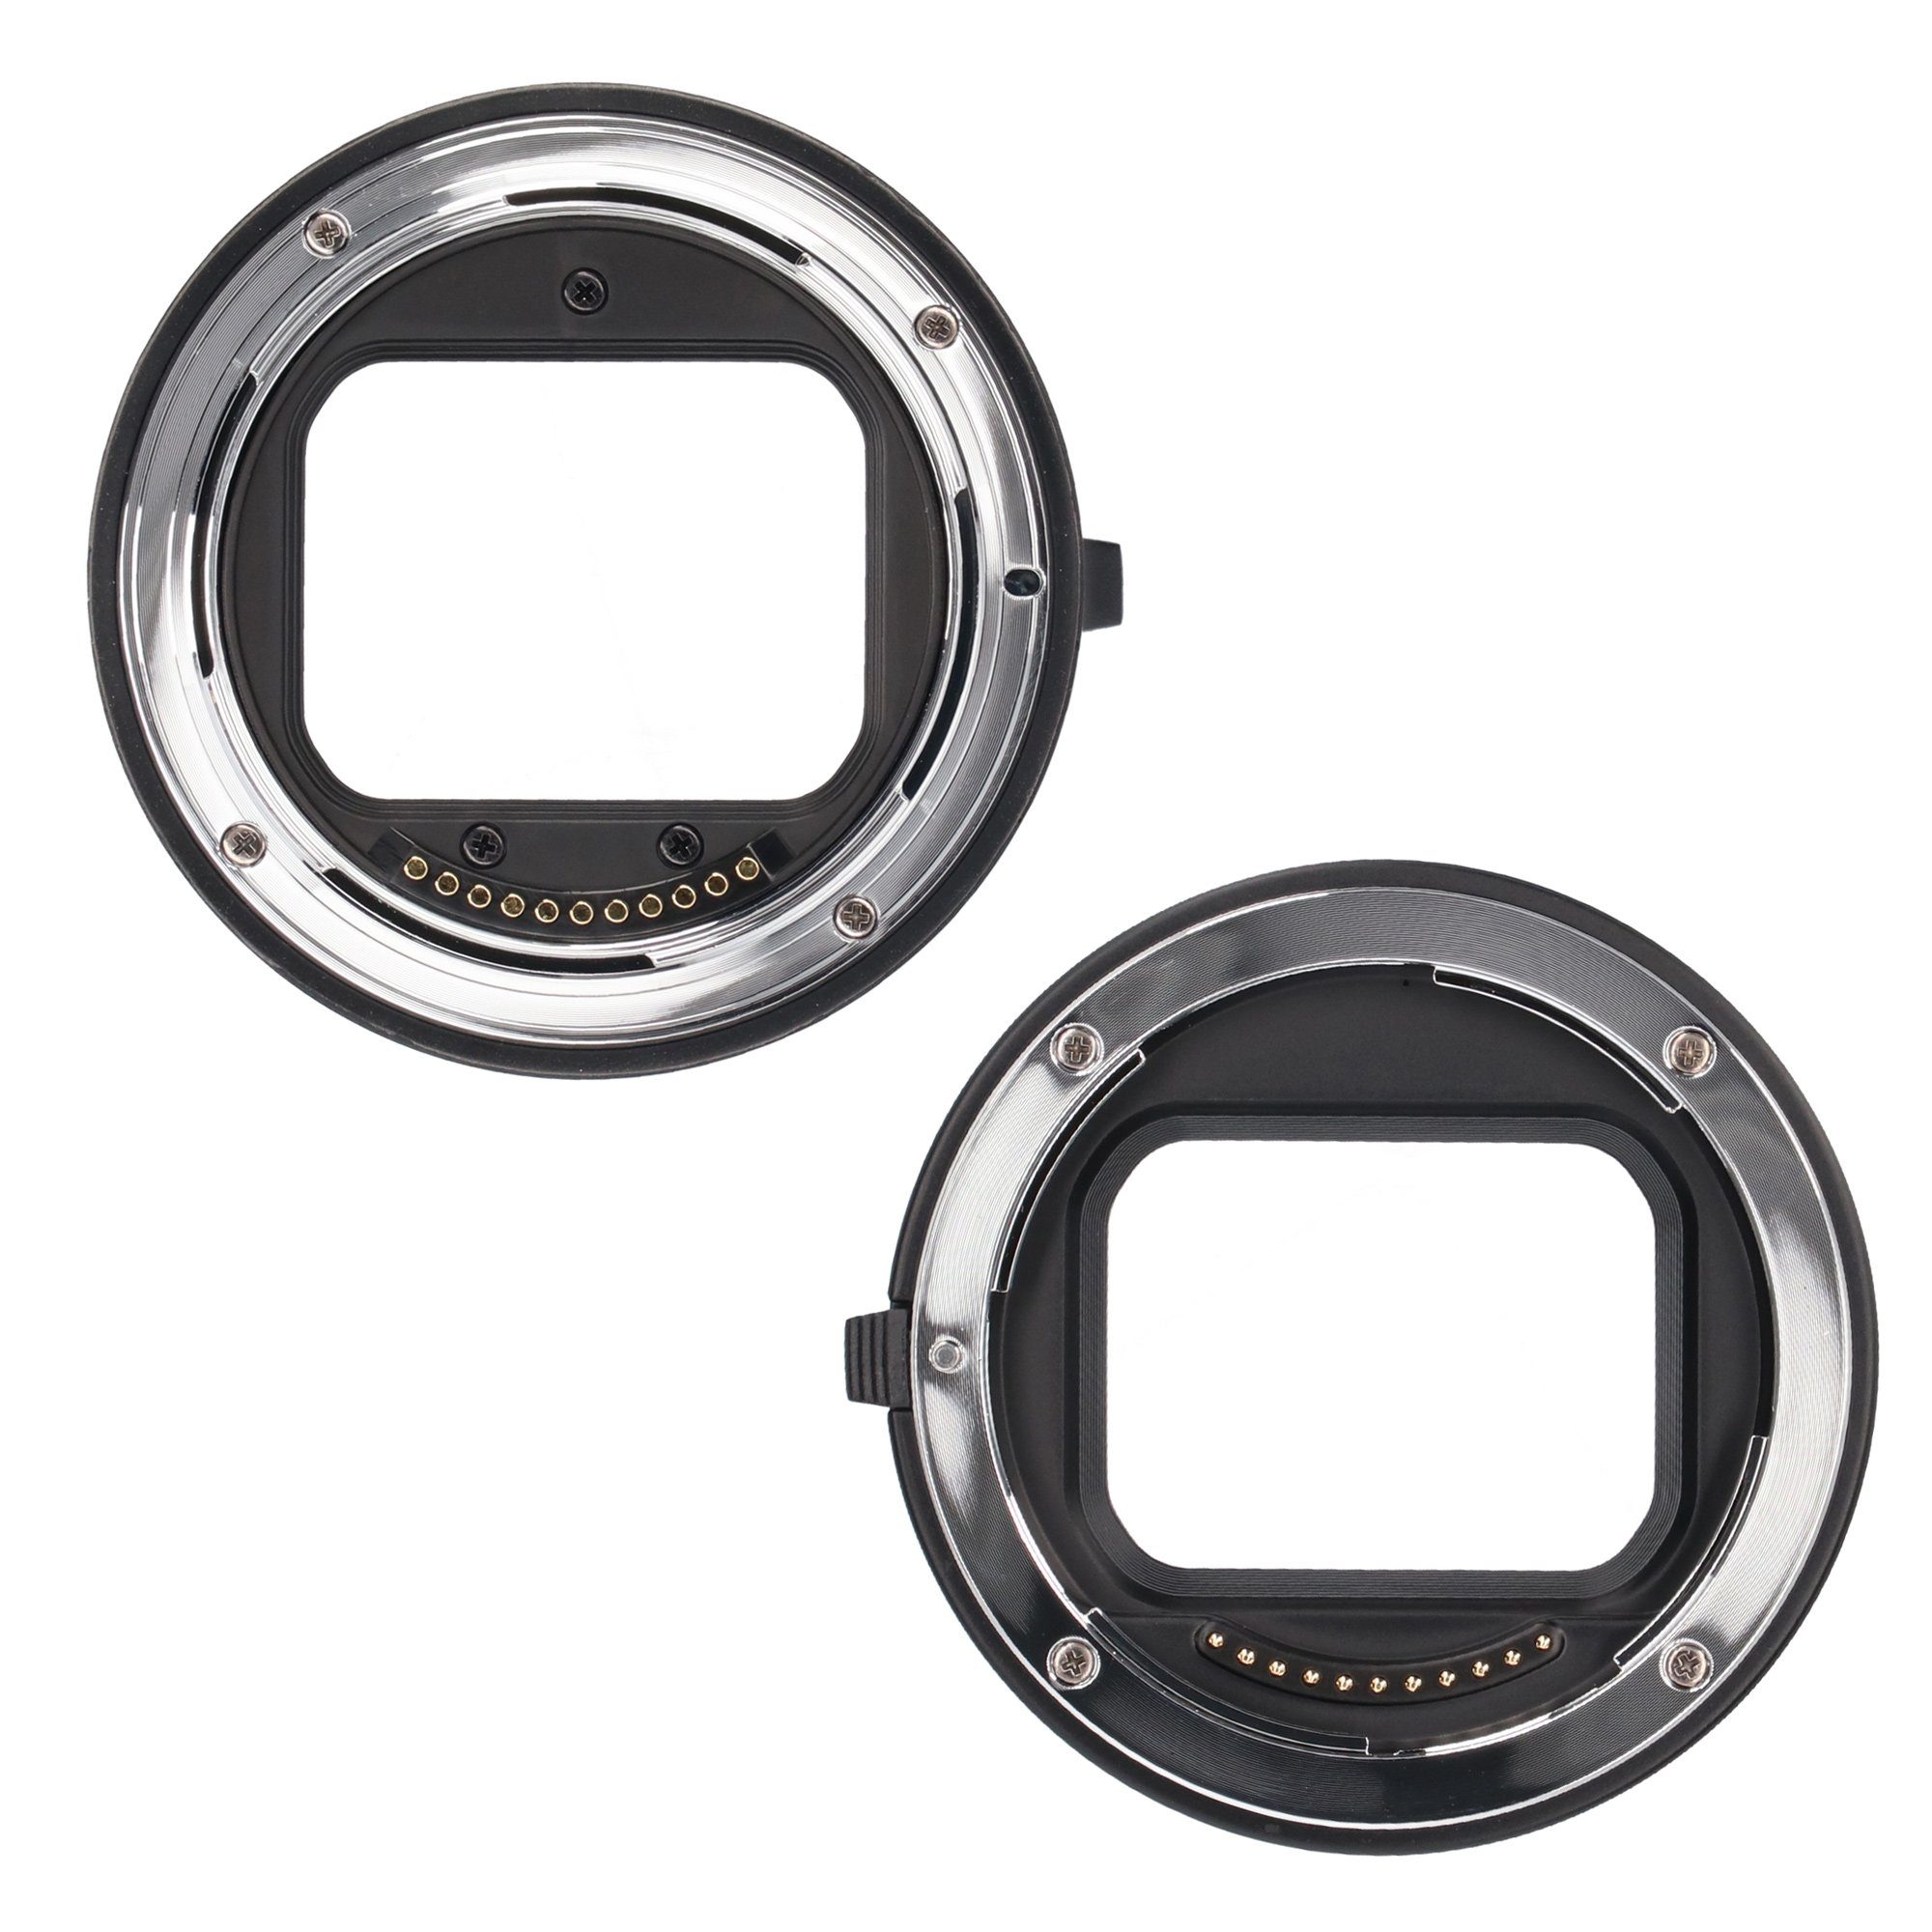 Meike Automatik-Makro-Zwischenringe für Makroobjektiv Nikon Z-Bajonett MK-Z-AF